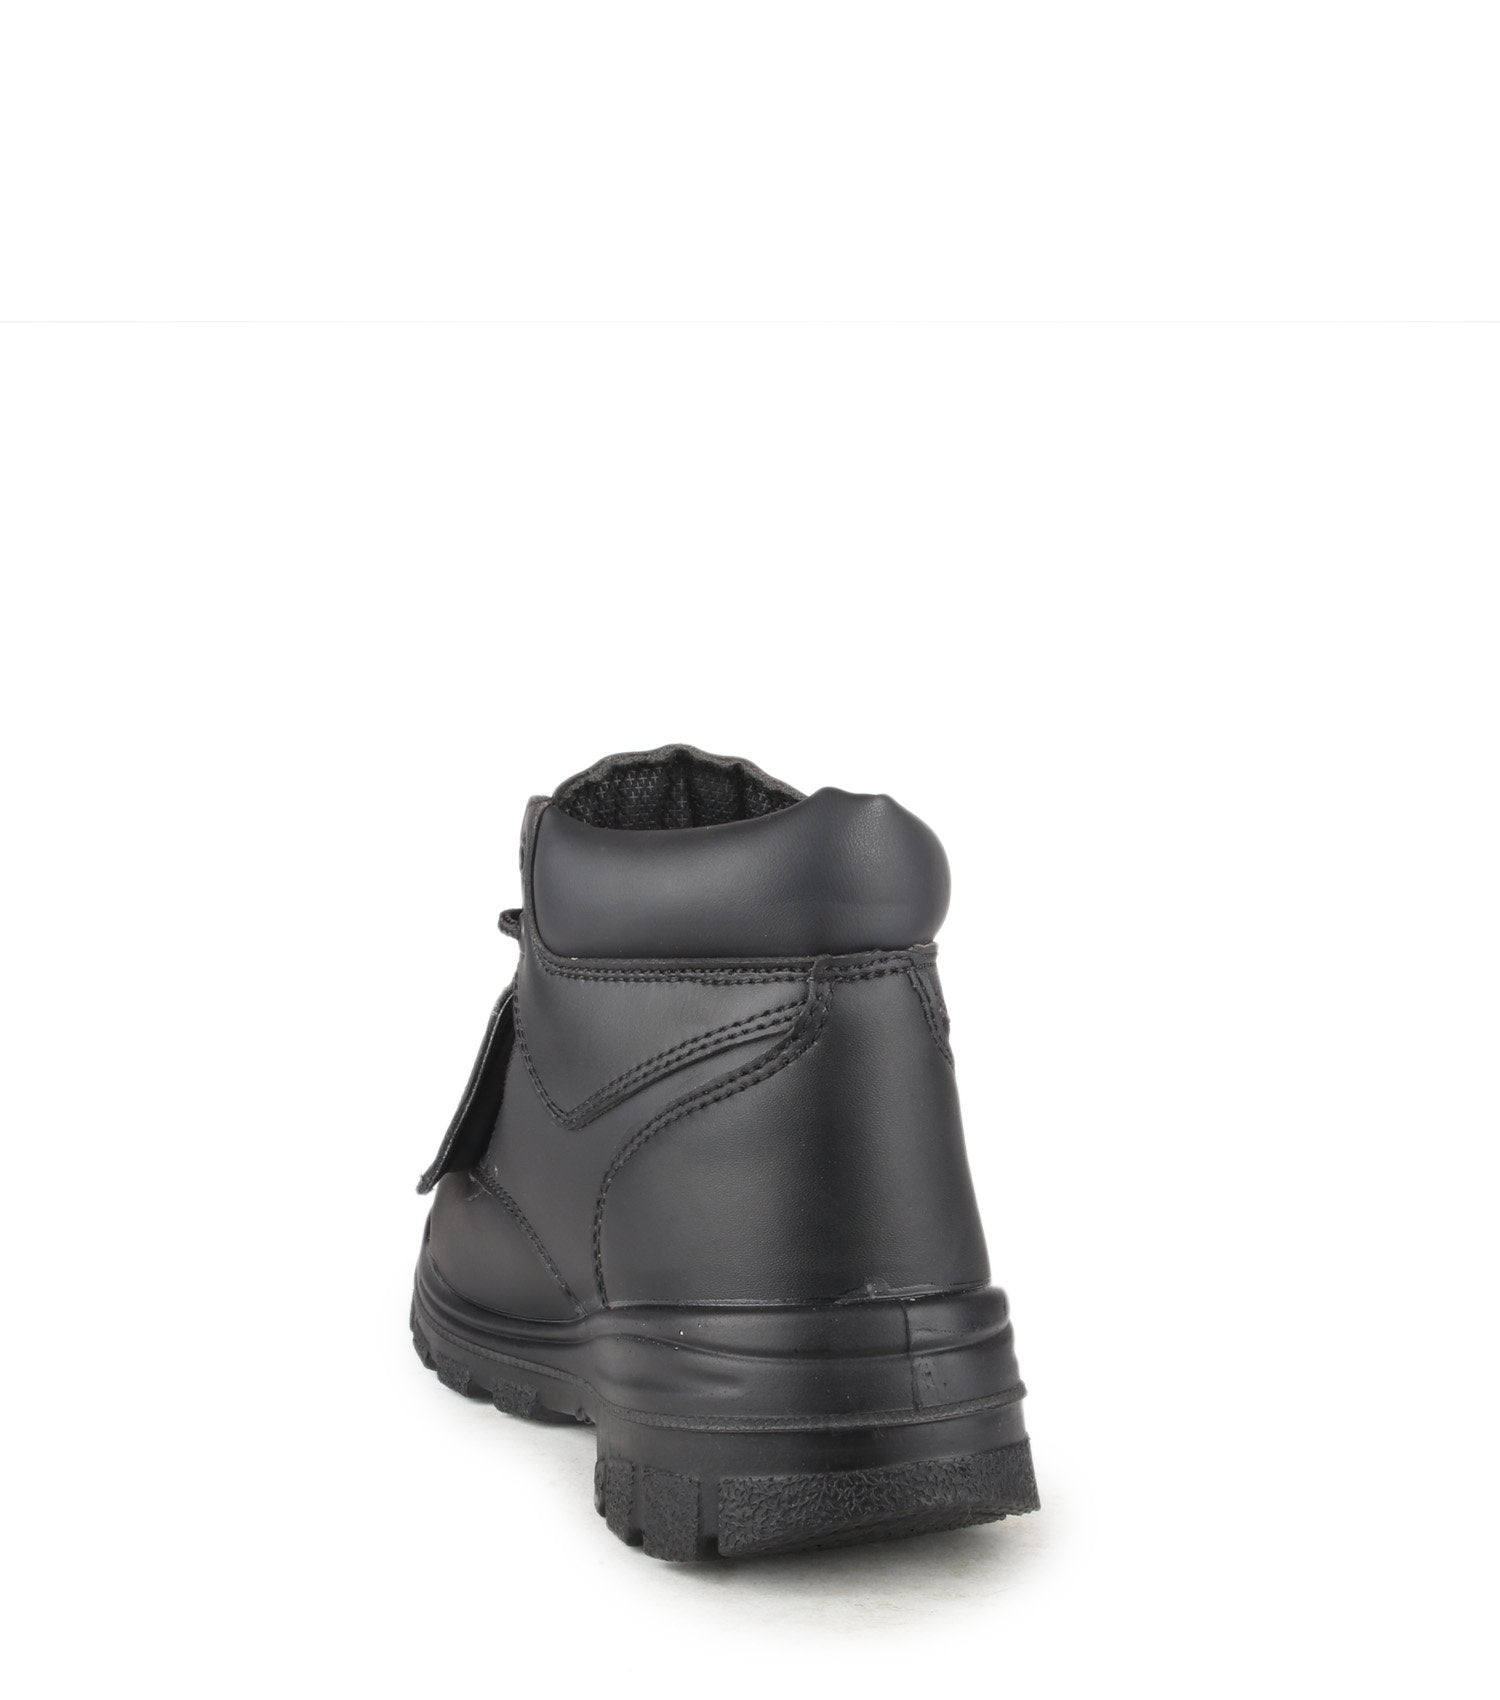 STC Press 6" External Metguard Safety Boots | Black | Size 7 - 14 Work Boots - Cleanflow